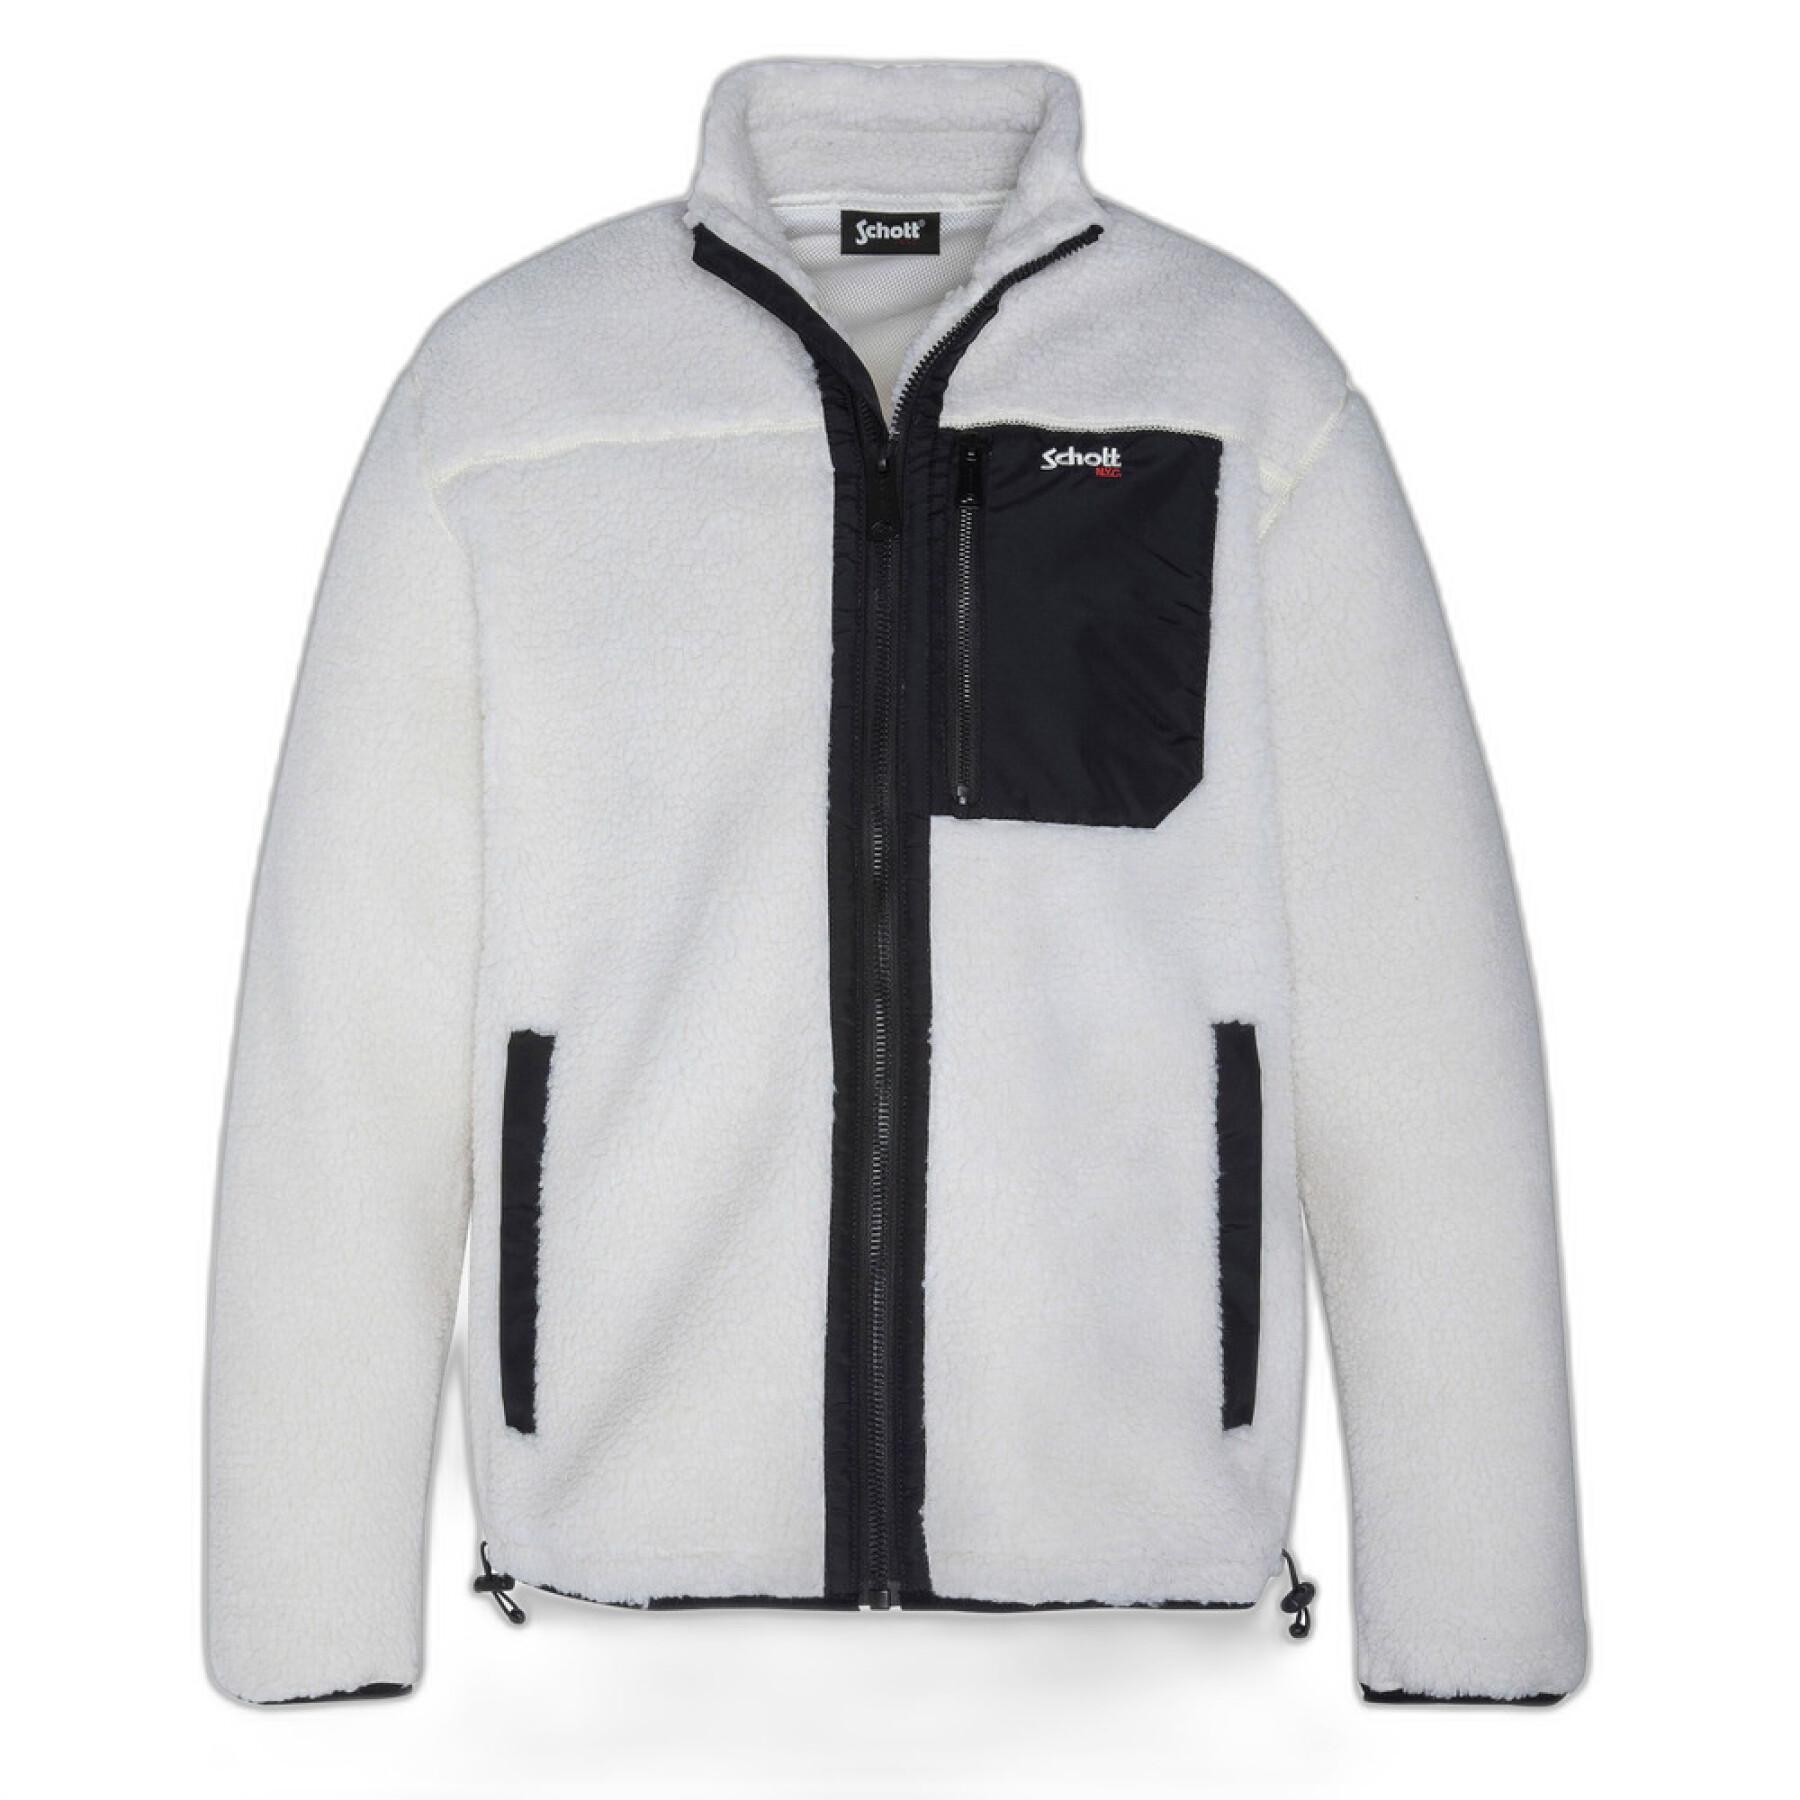 Zipped sweatshirt with pockets Schott